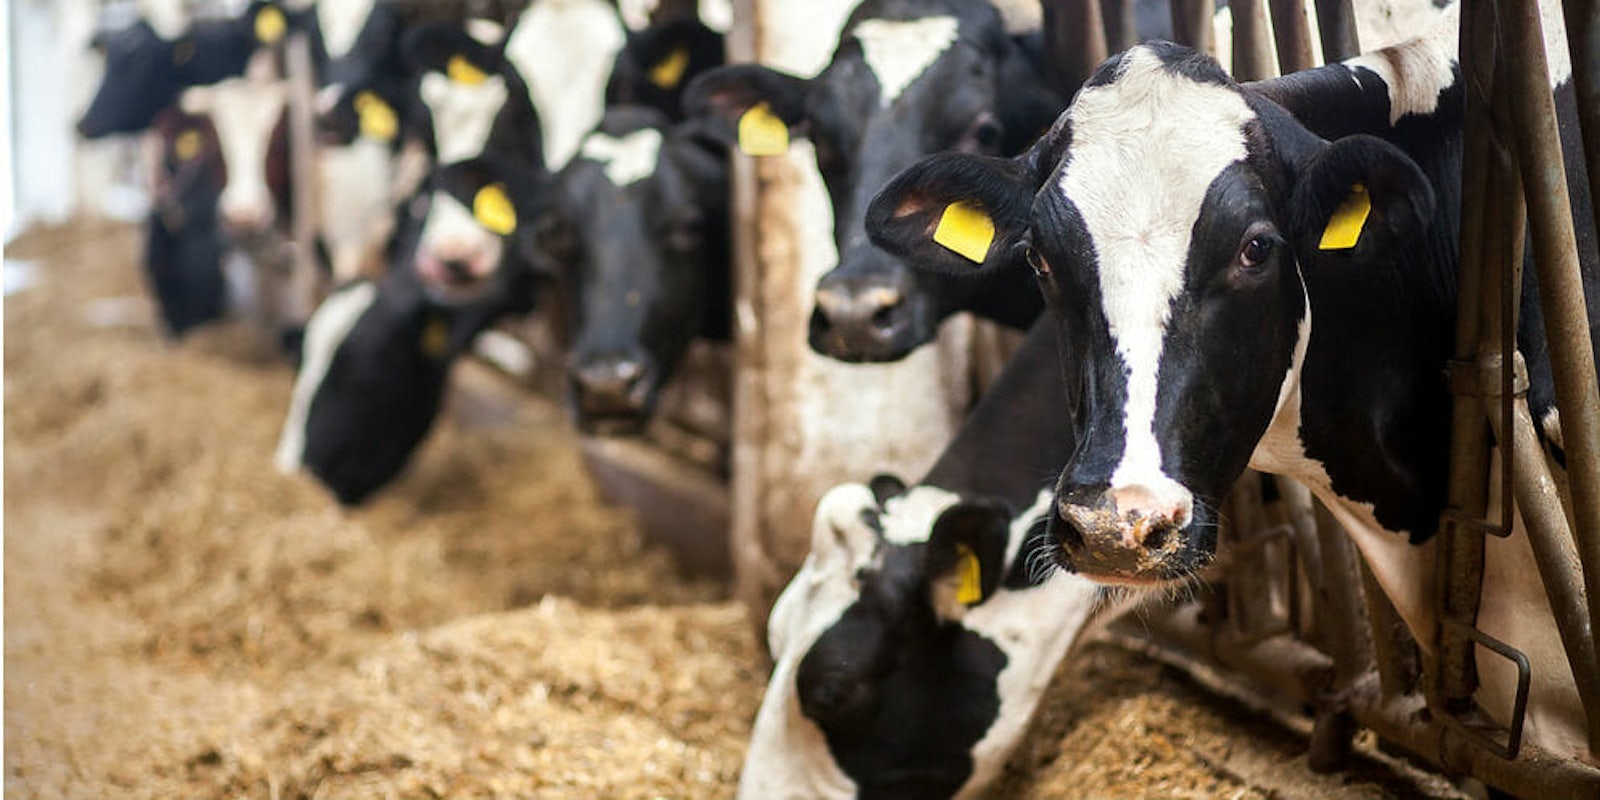 cows barn animals - hiv vaccine